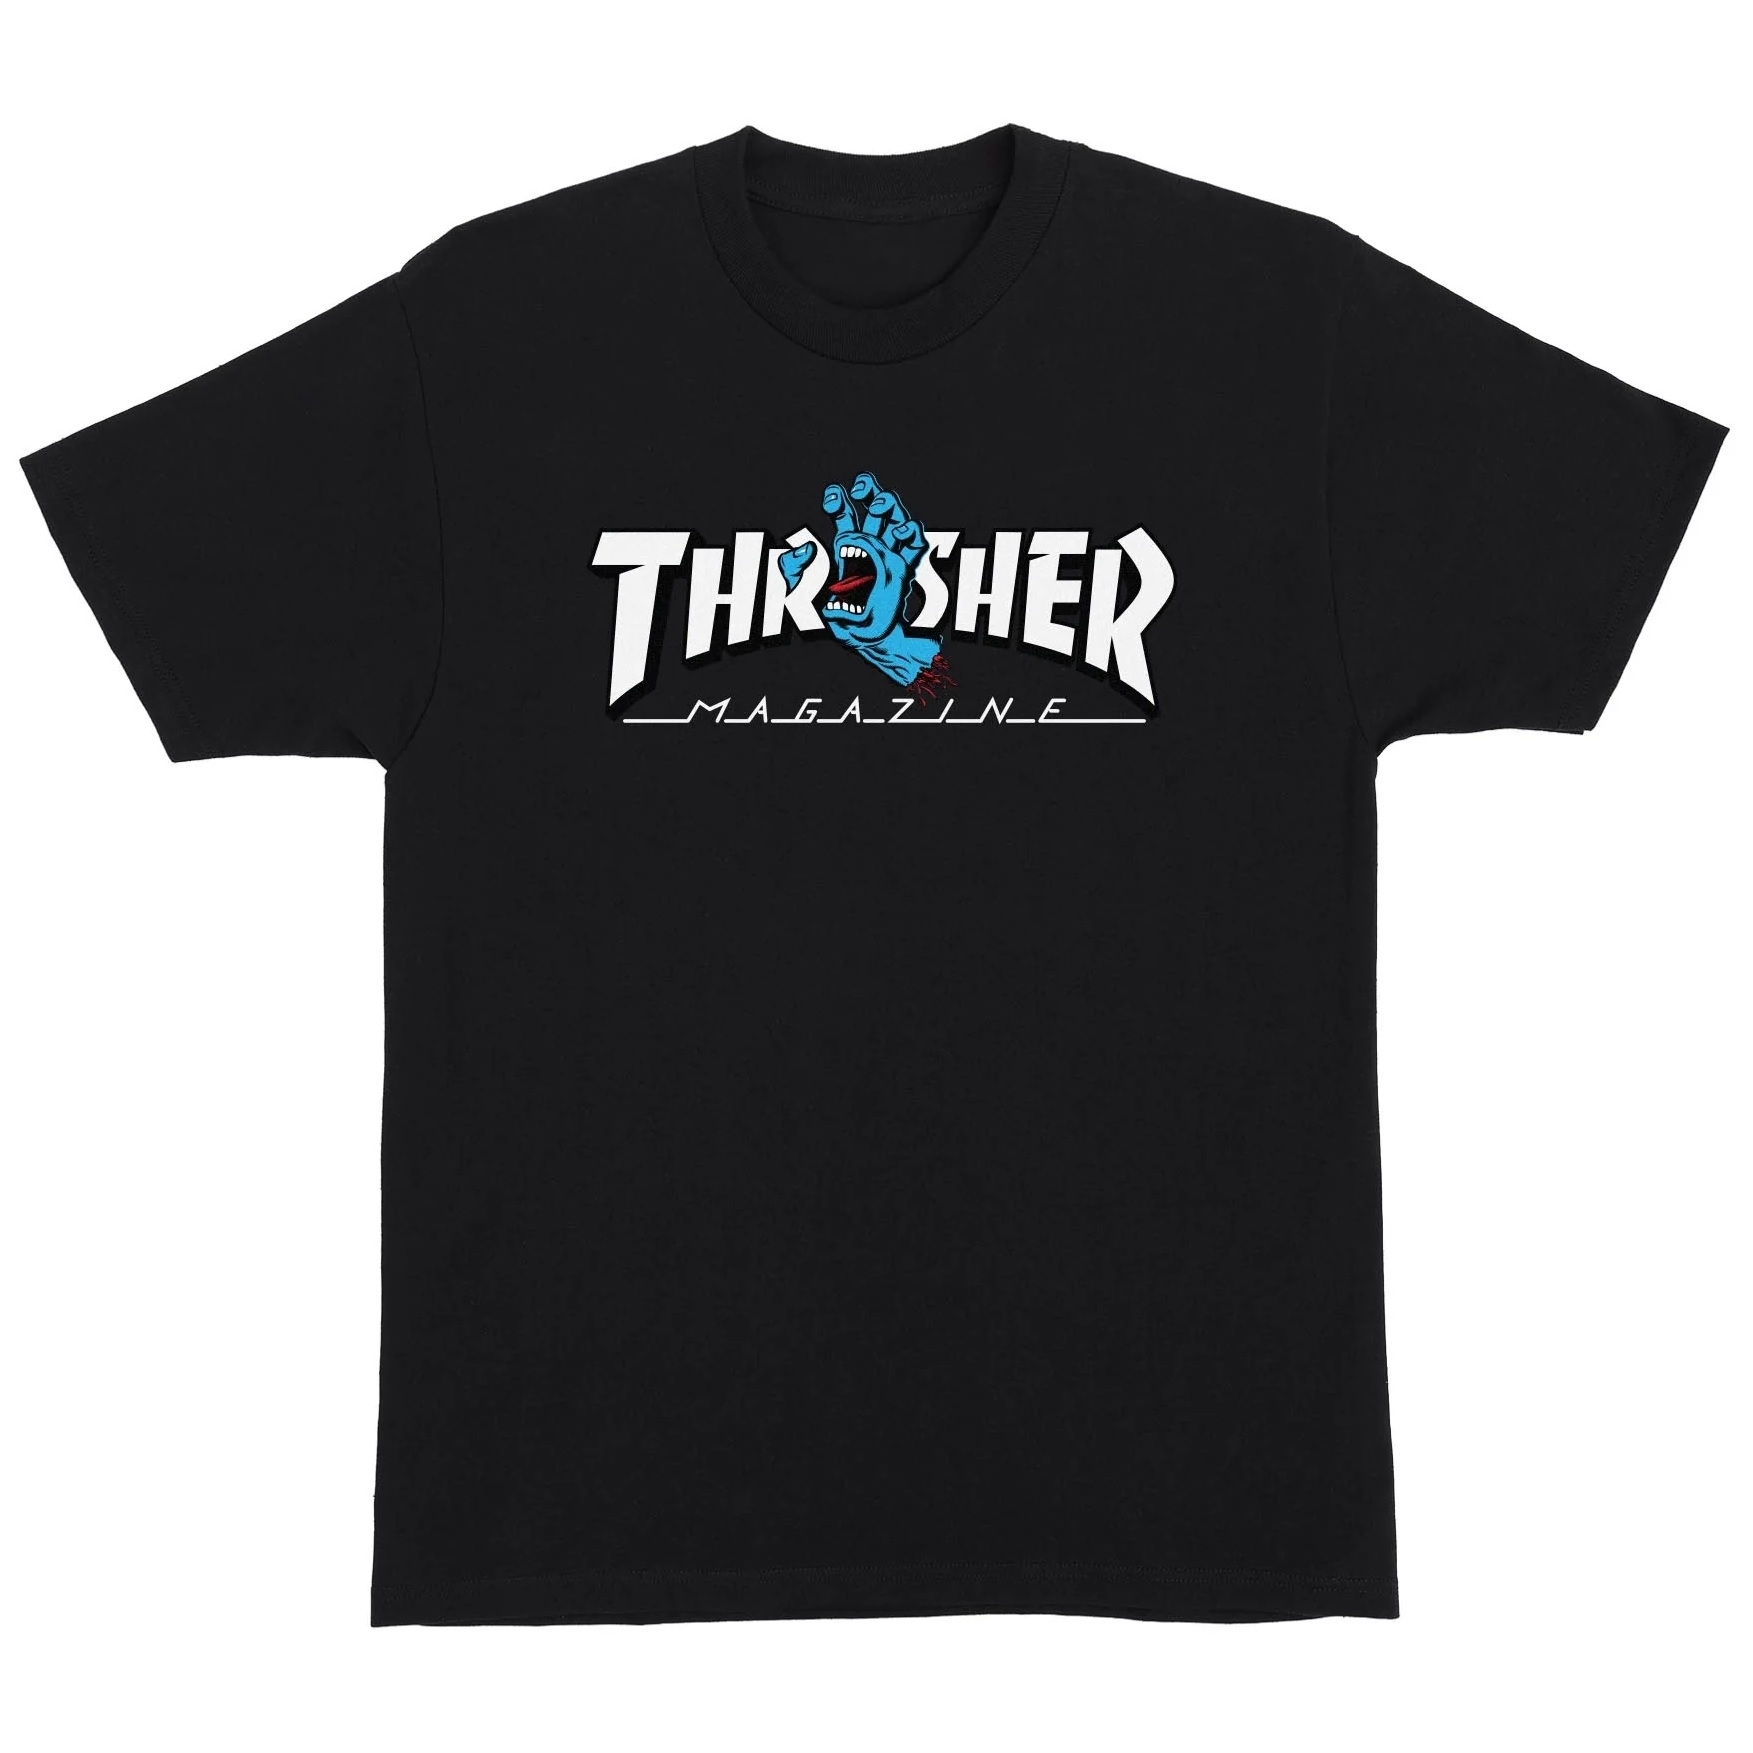 Harlem Roadrunners - Superficial - T-Shirt